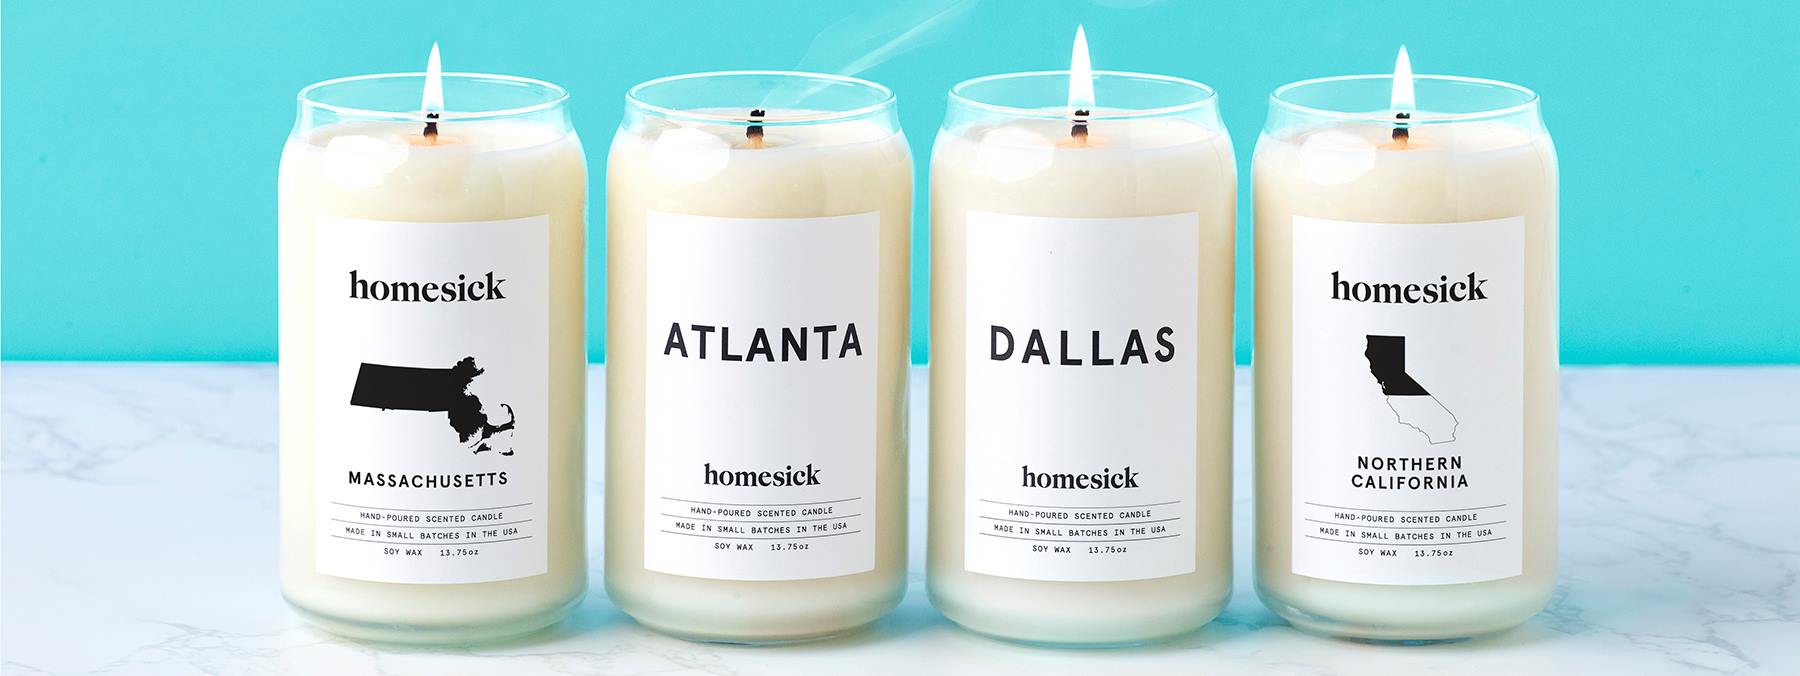 Homesick Scented Candle Atlanta 